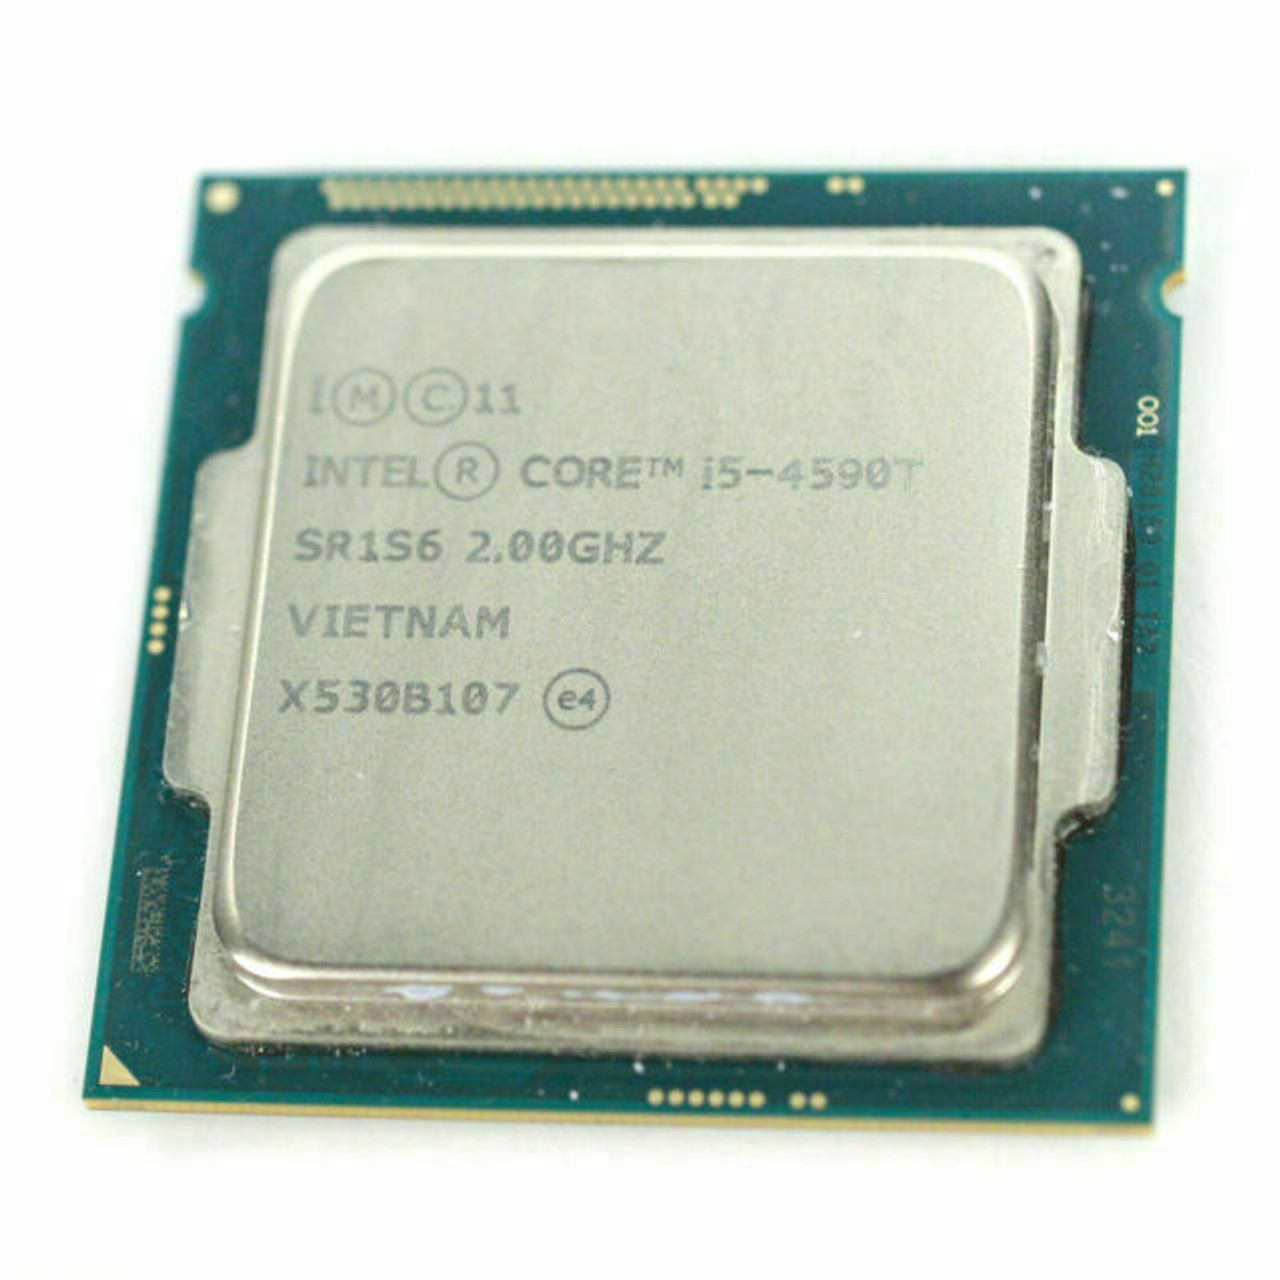 Intel Core i5-4590T 2.00 Ghz Processor SR1S6